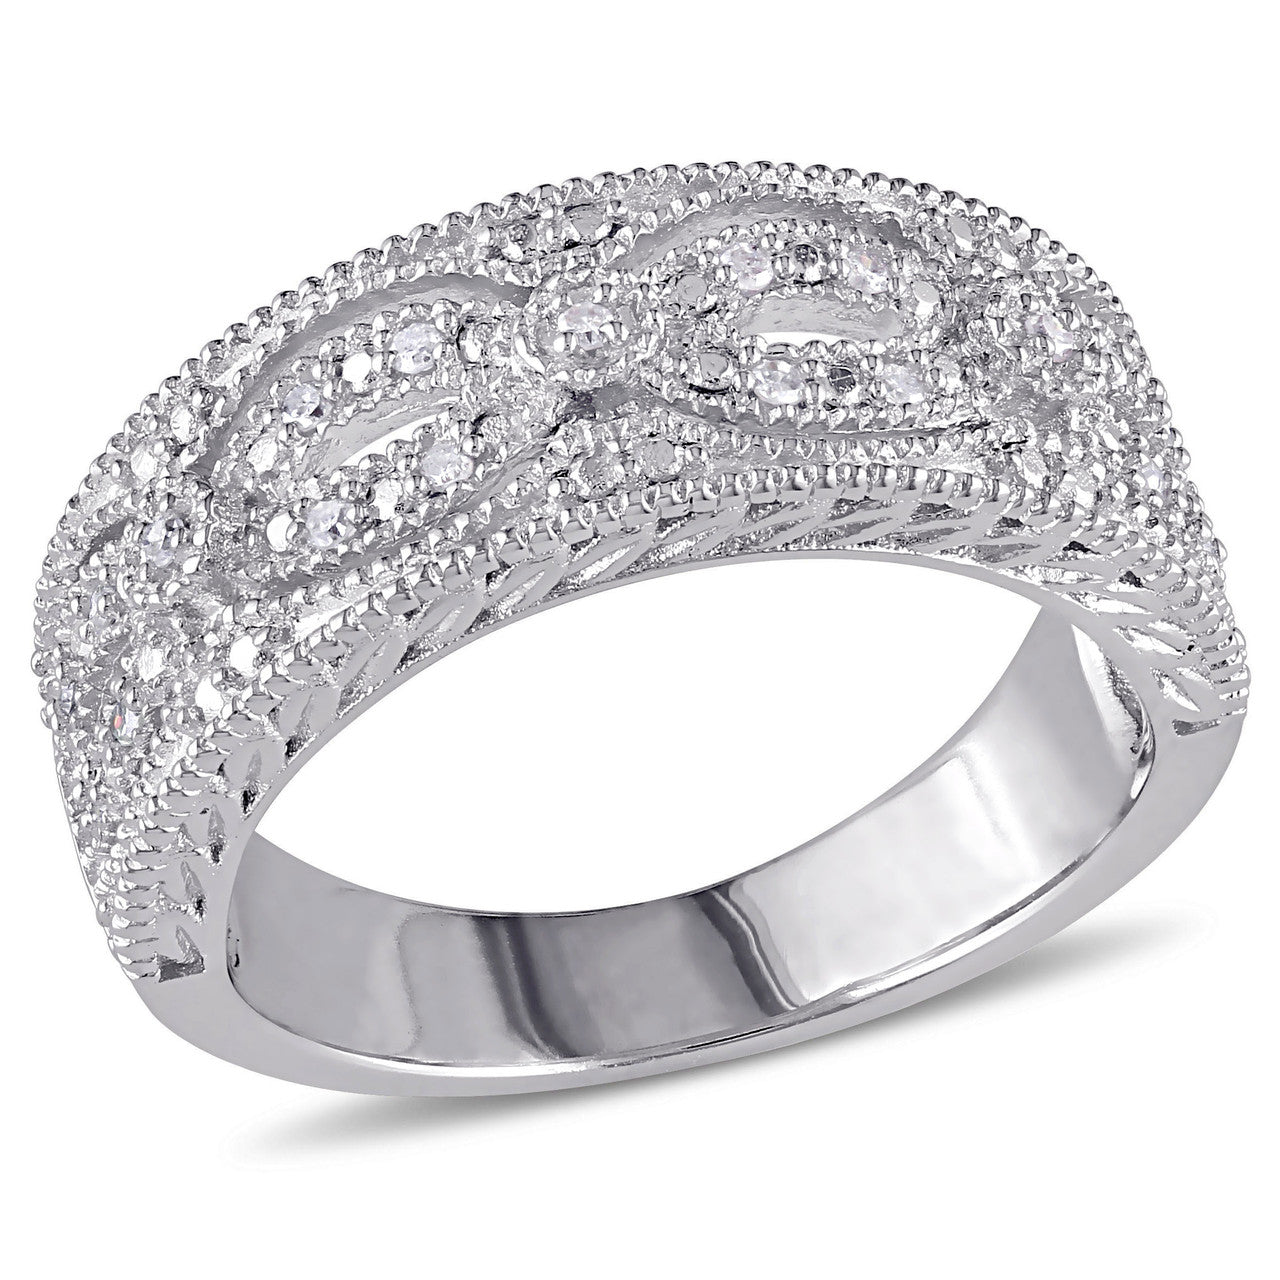 Ice Jewellery 1/10 CT Diamond TW Vintage Ring in Sterling Silver - 75000004988 | Ice Jewellery Australia